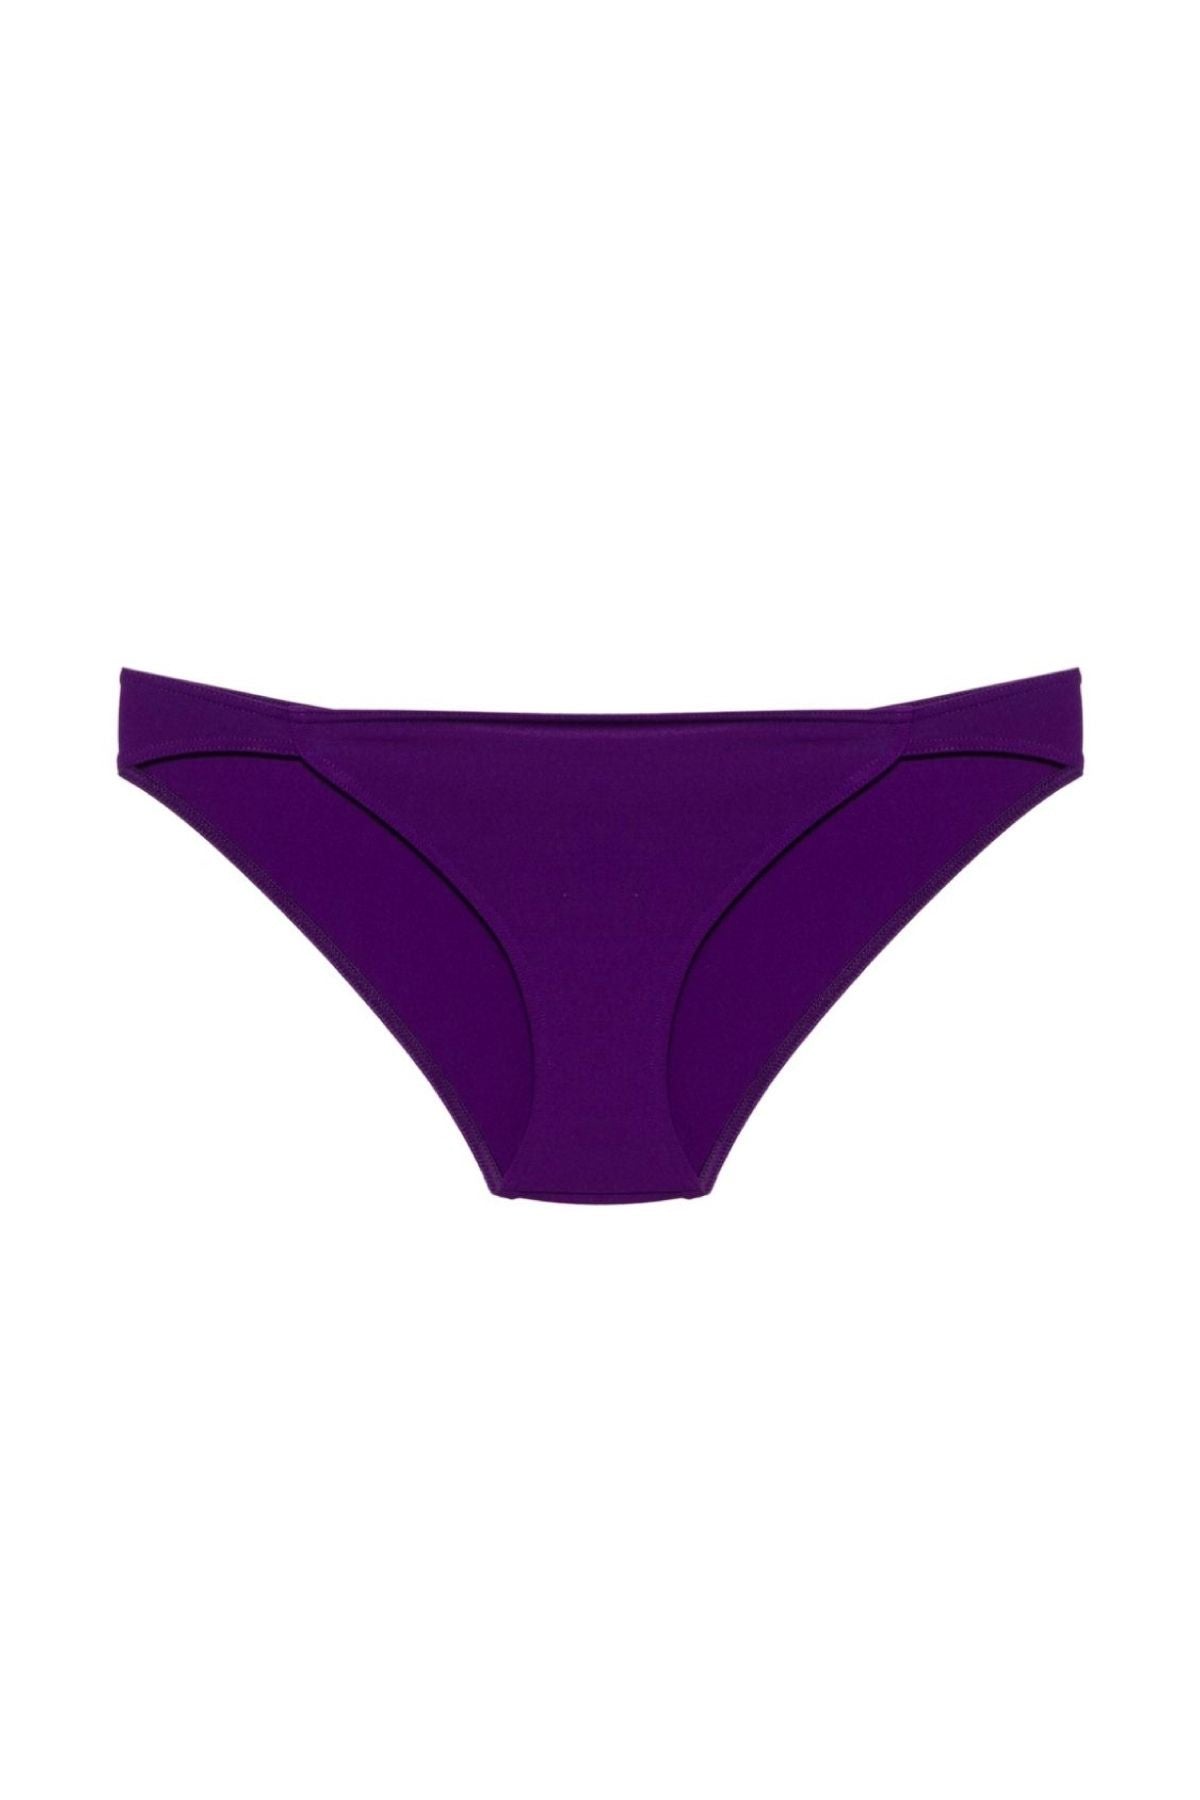 Eres Cavale Bikini Bottom - Inka Purple